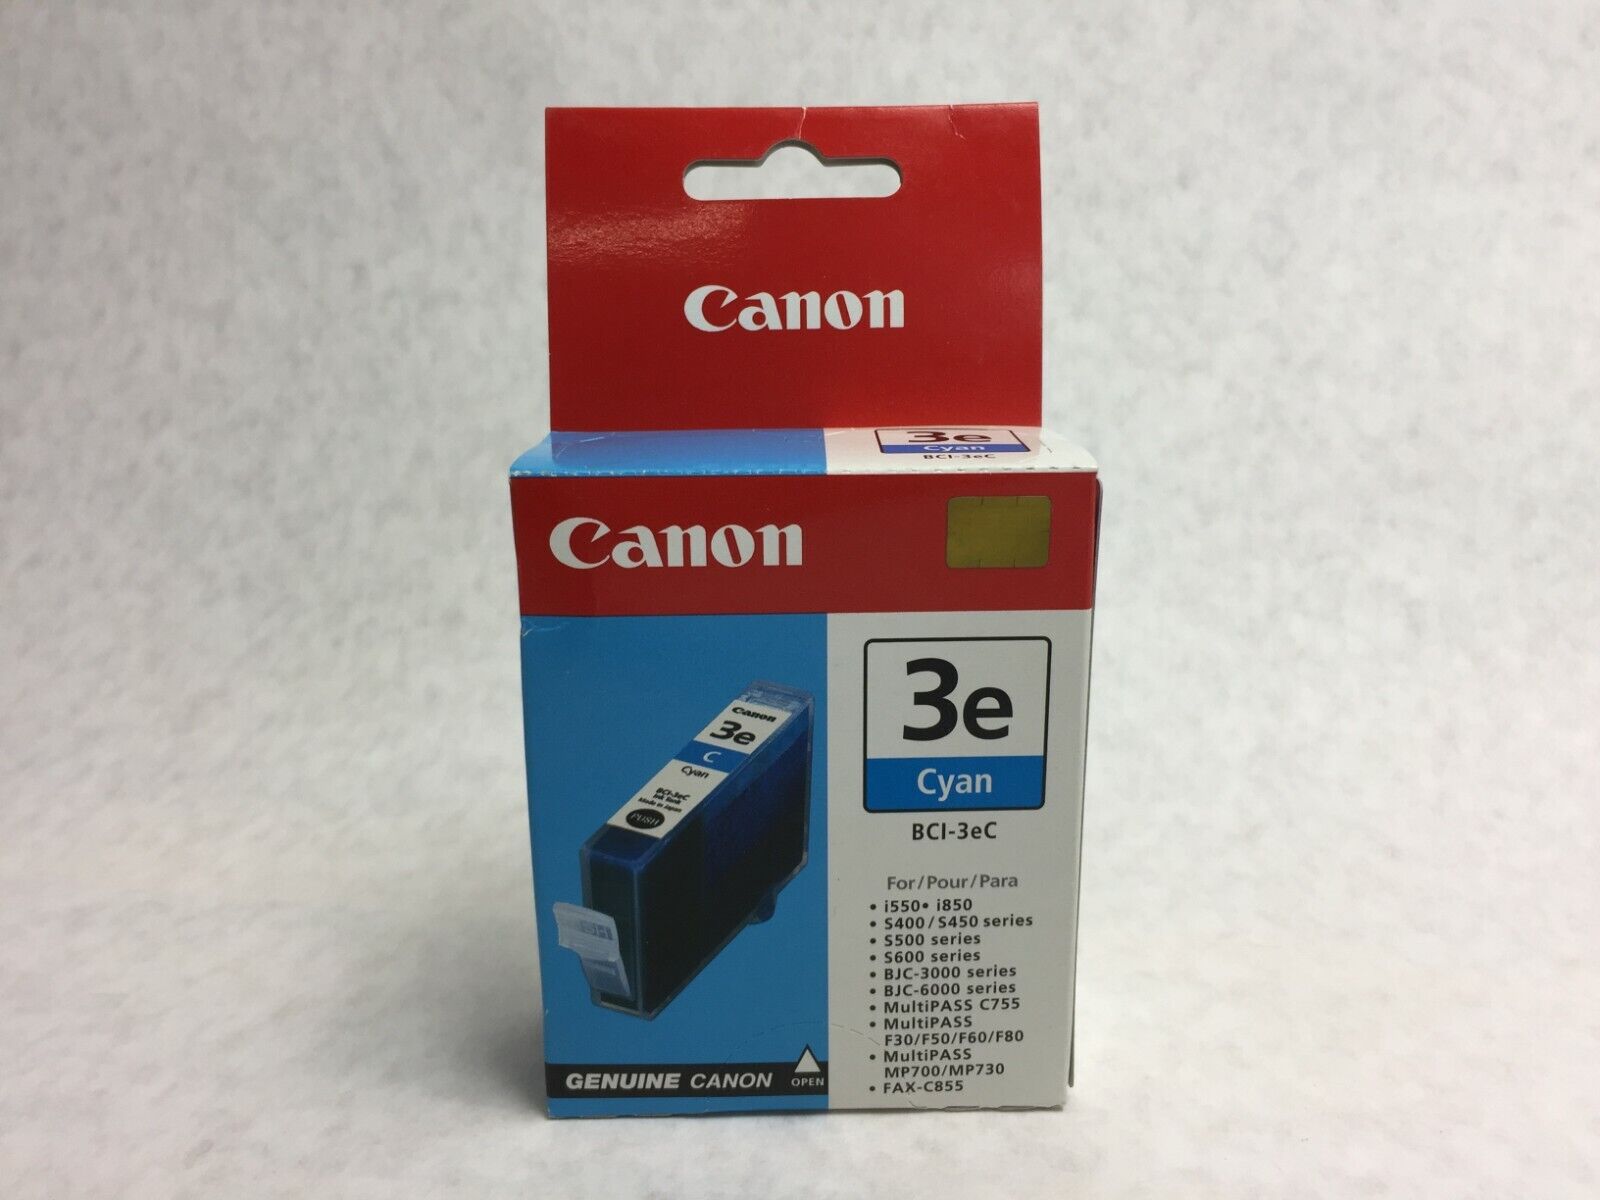 Genuine Canon Cyan 3e BCI-3eC Ink Cartridge